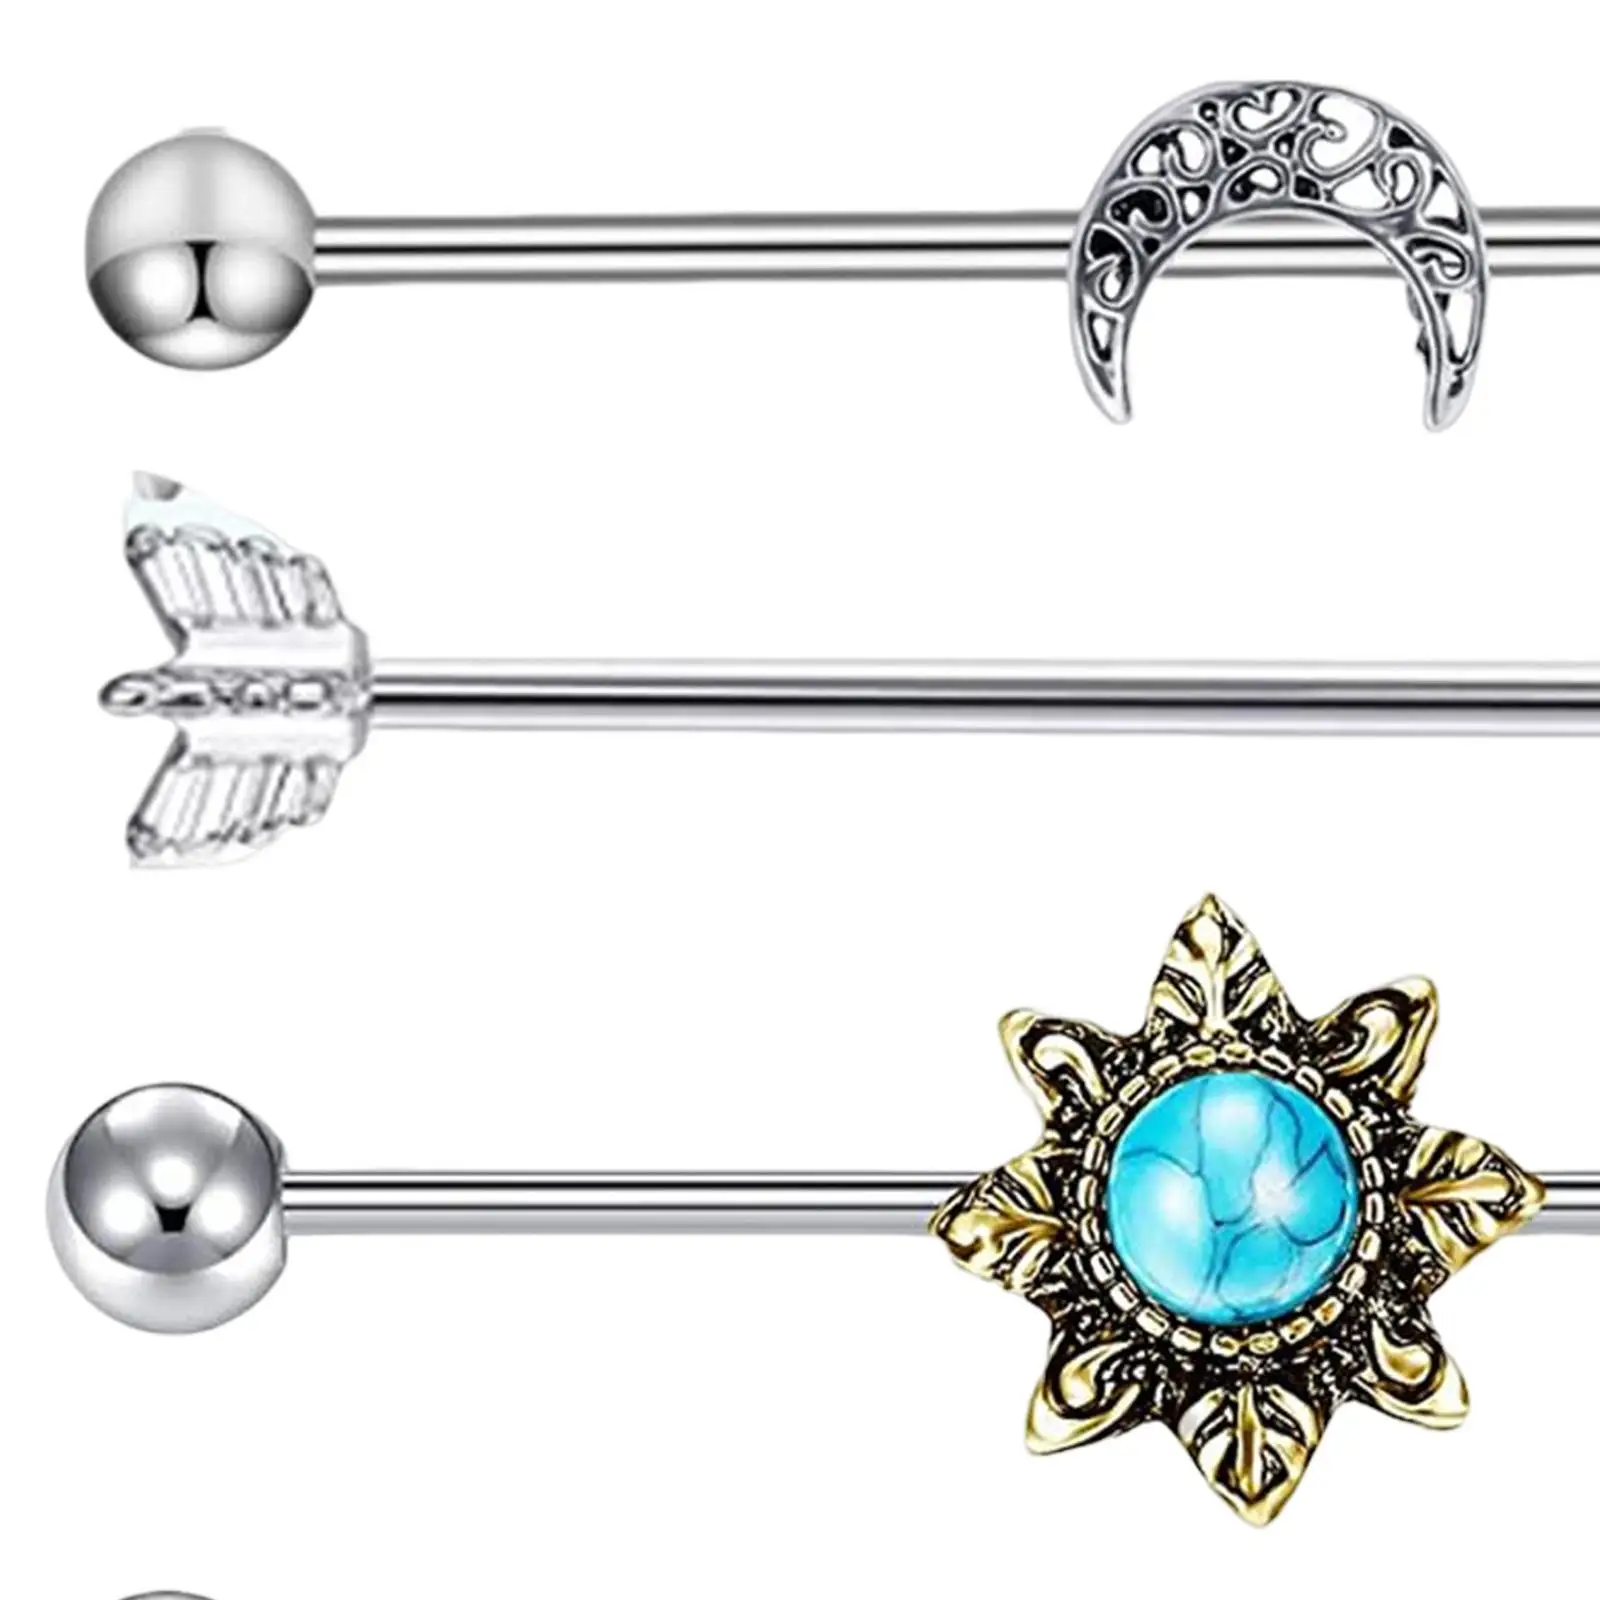 6Pcs Industrial Barbell Earrings Cartilage Body Piercing Jewelry Statement 38mm 1 1/2inch 14G Industrial Piercing Bar for Women